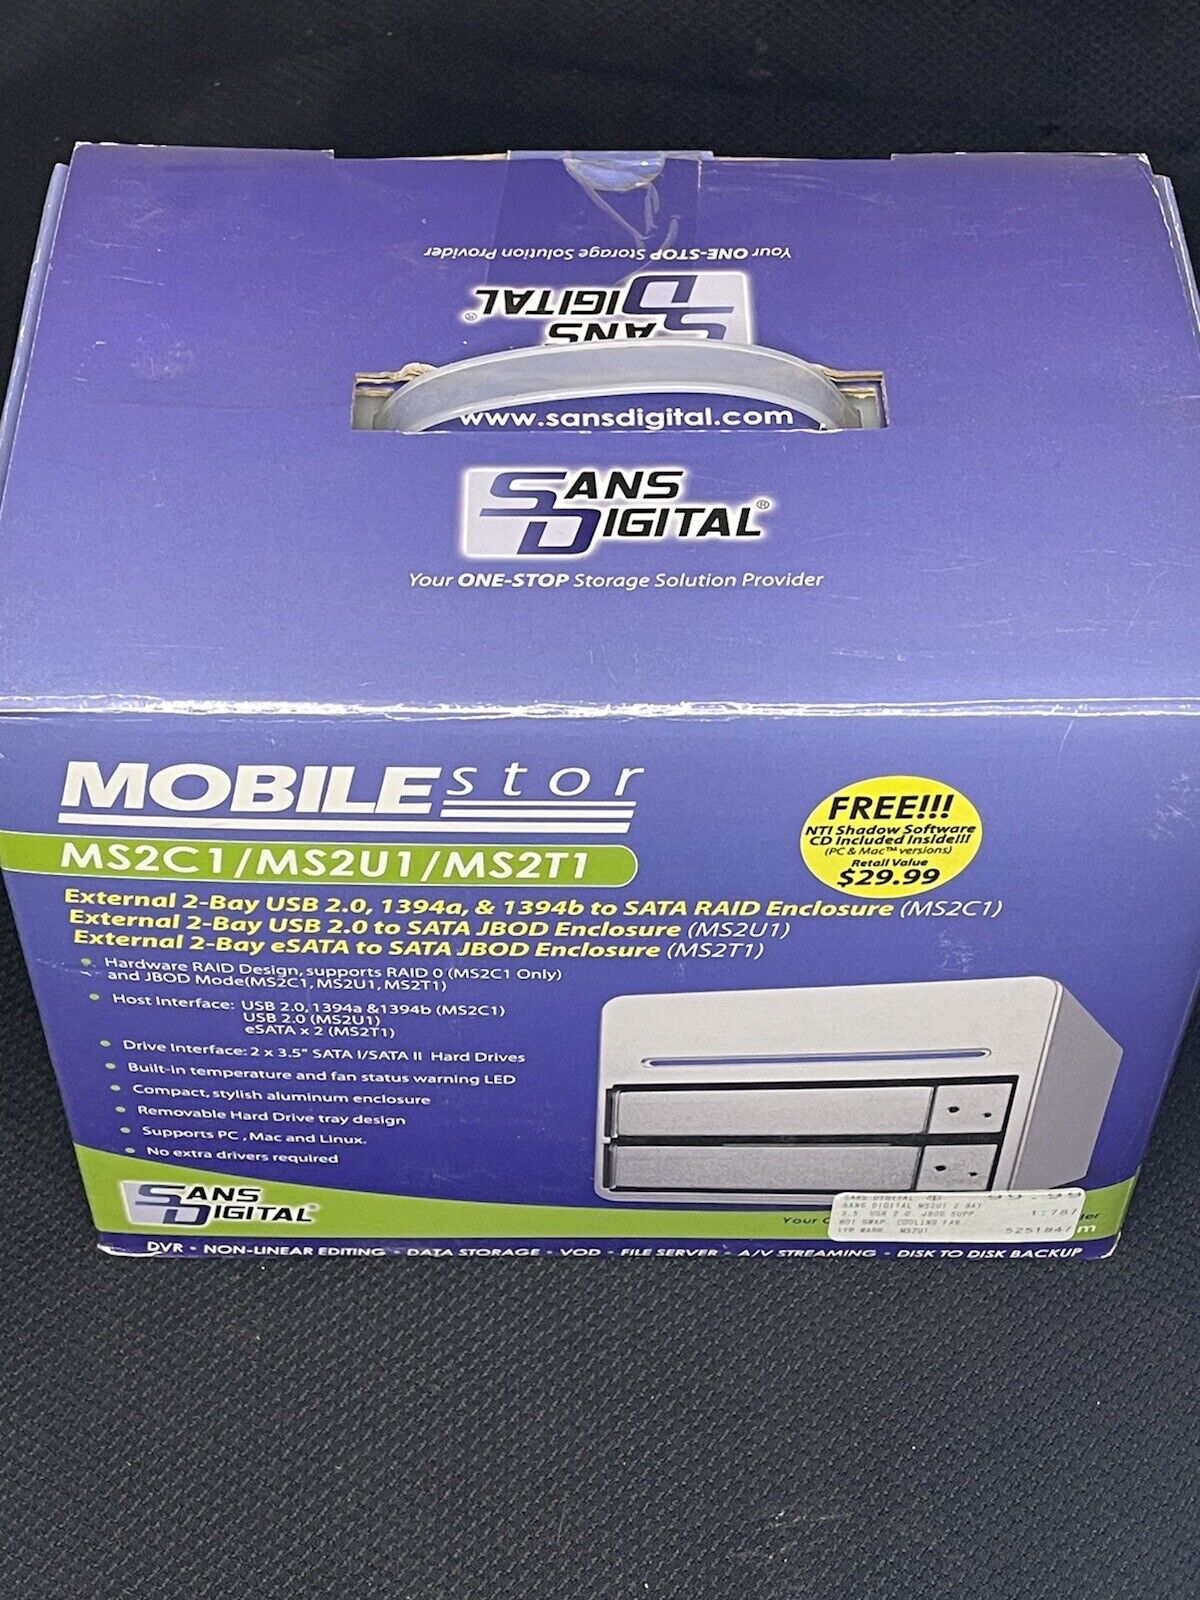 Mobile Stor MS2C1/ MS2U1/ MS2T1 Jbod Box Sans Digital Customizable MS2U1 eSATA